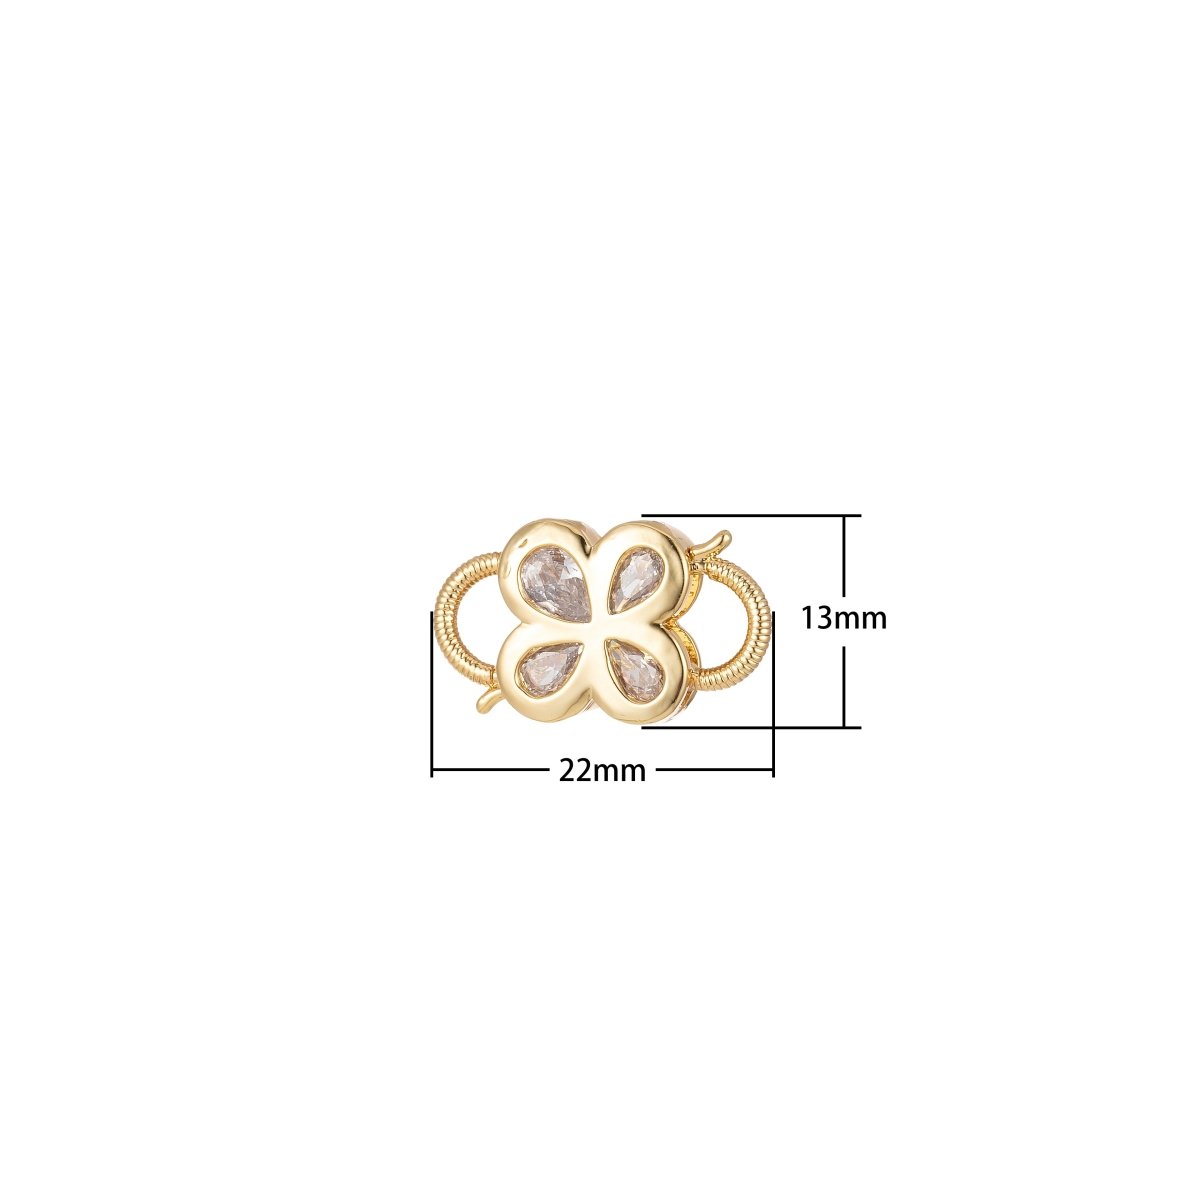 Mini Gold Clover Cubic Zirconia Clasp Lock, Interlock Cubic Clasp Fastener for Bracelet Necklace Clear Cz Supply L-350 - DLUXCA